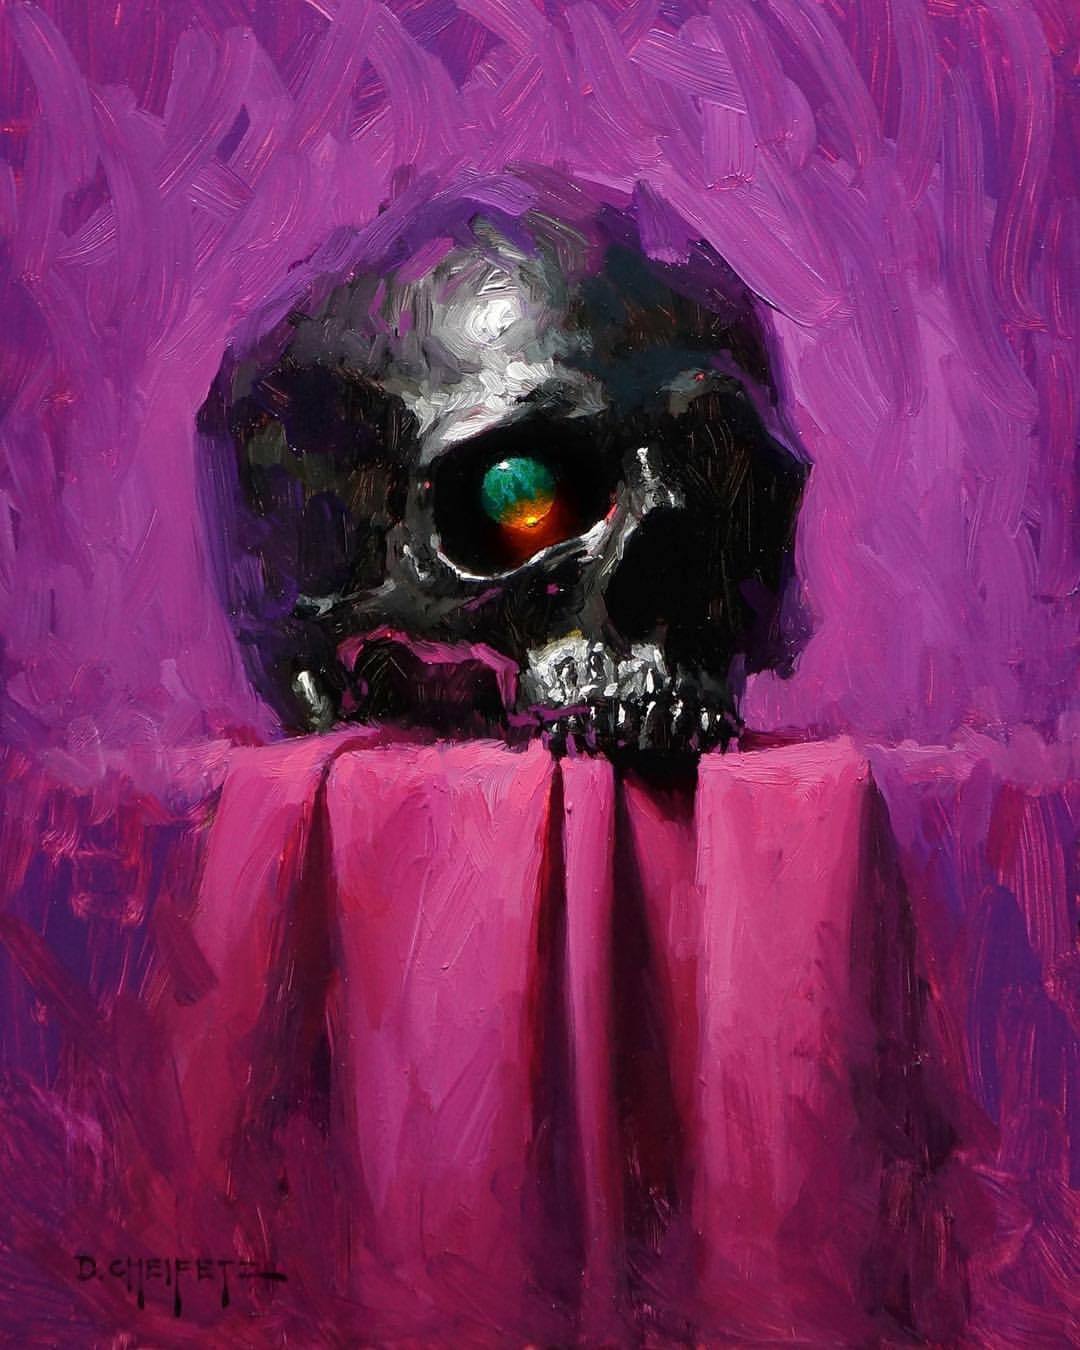 beautifulbizarremagazine:There’s something about @davidcheifetz’ skull paintings